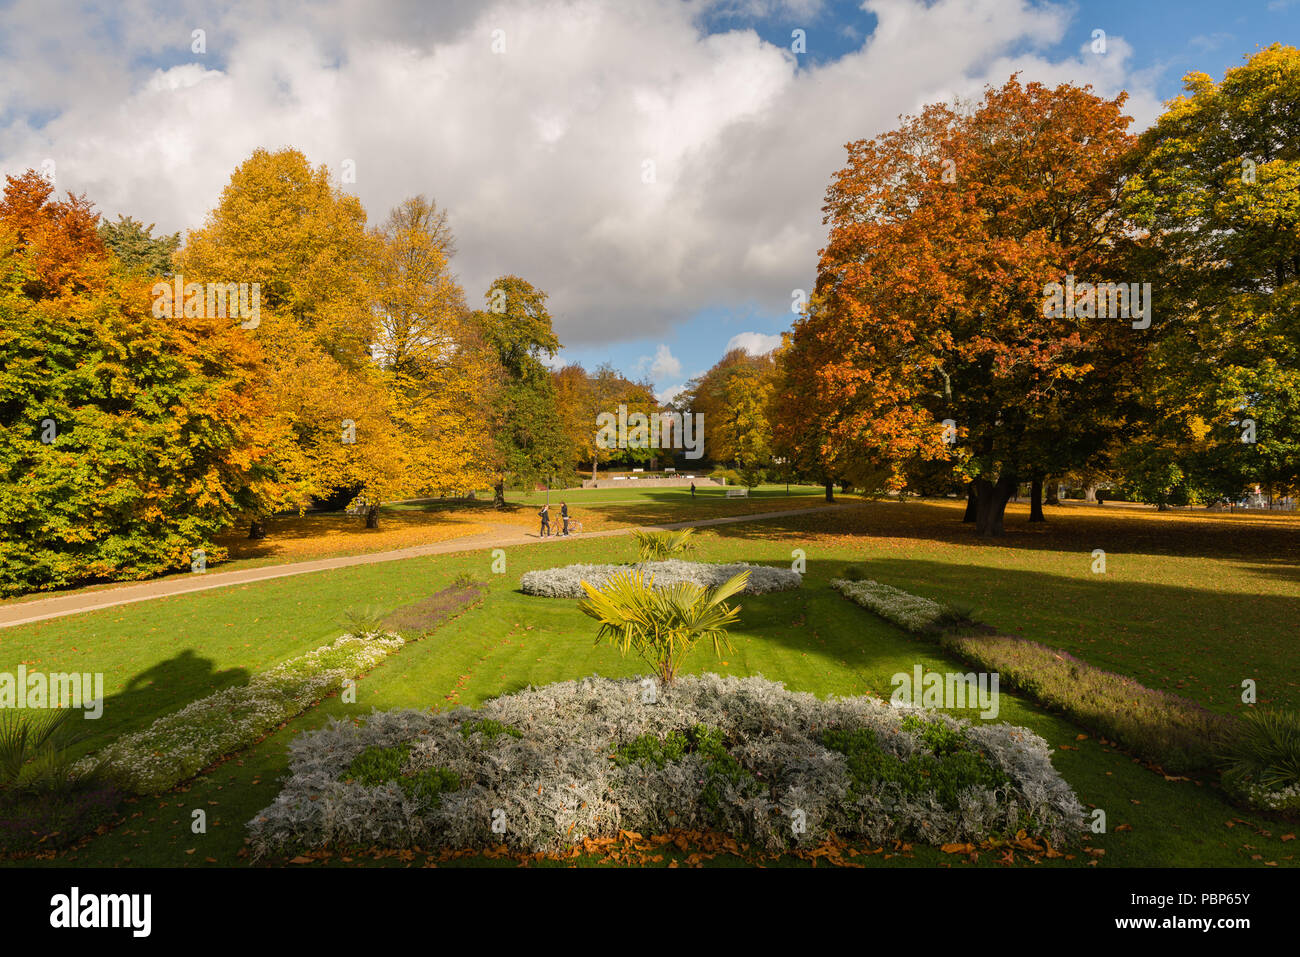 Schlossgarten  or Castle Garden, autumn time, fall foliage,Kiel, capital of Schleswig-Holstein, Germany, Europe Stock Photo